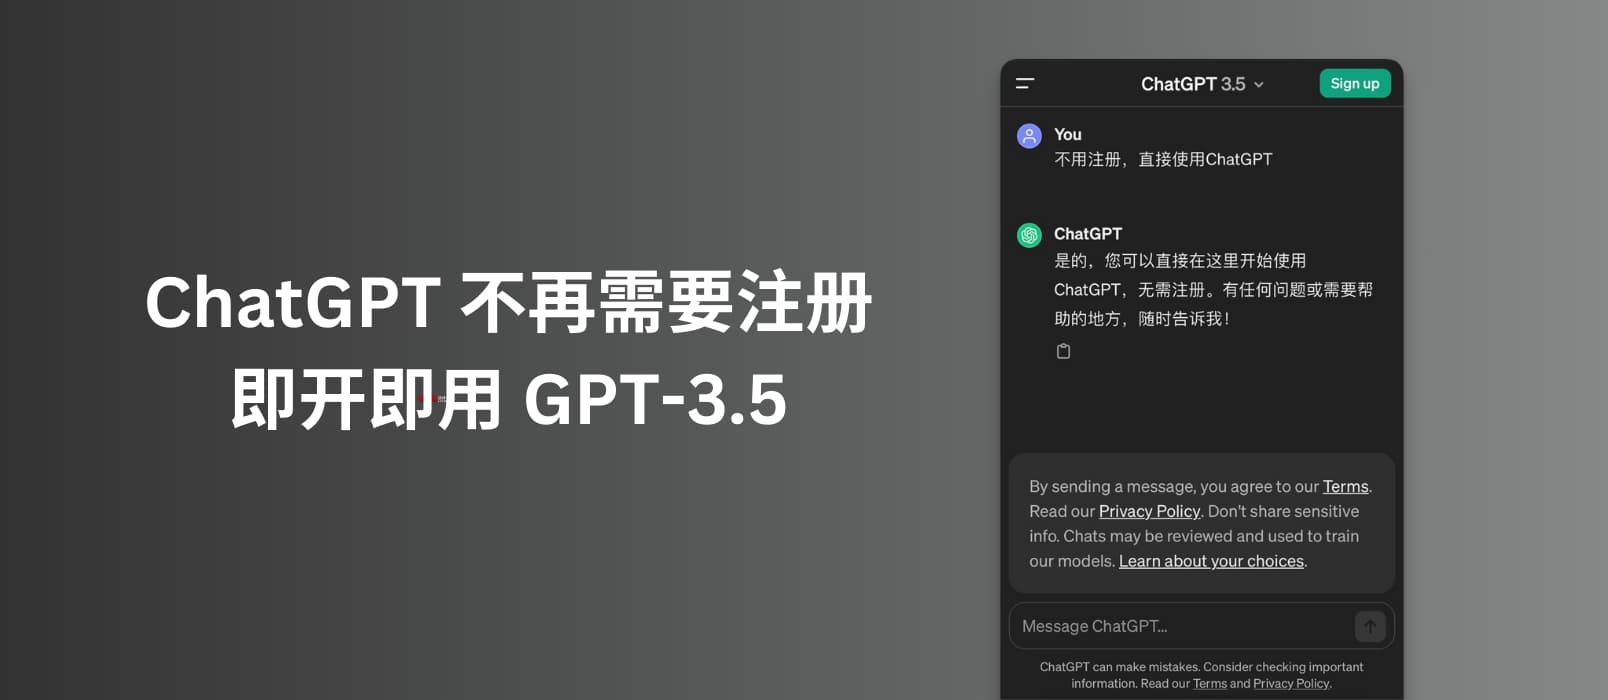 ChatGPT 不再需要注册，即开即用直接使用 GPT-3.5